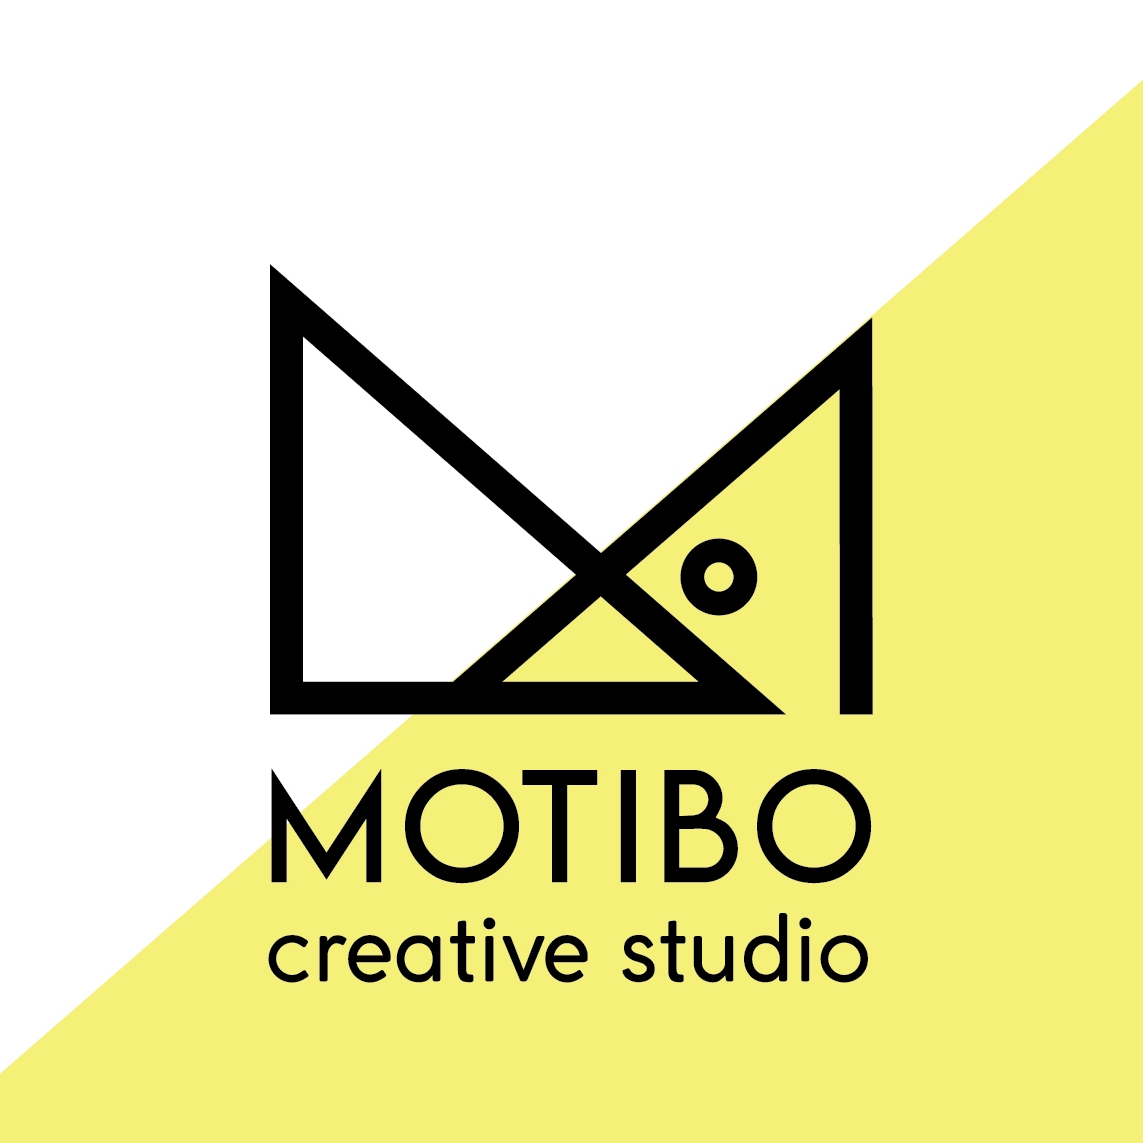 "Motivo creative studio"